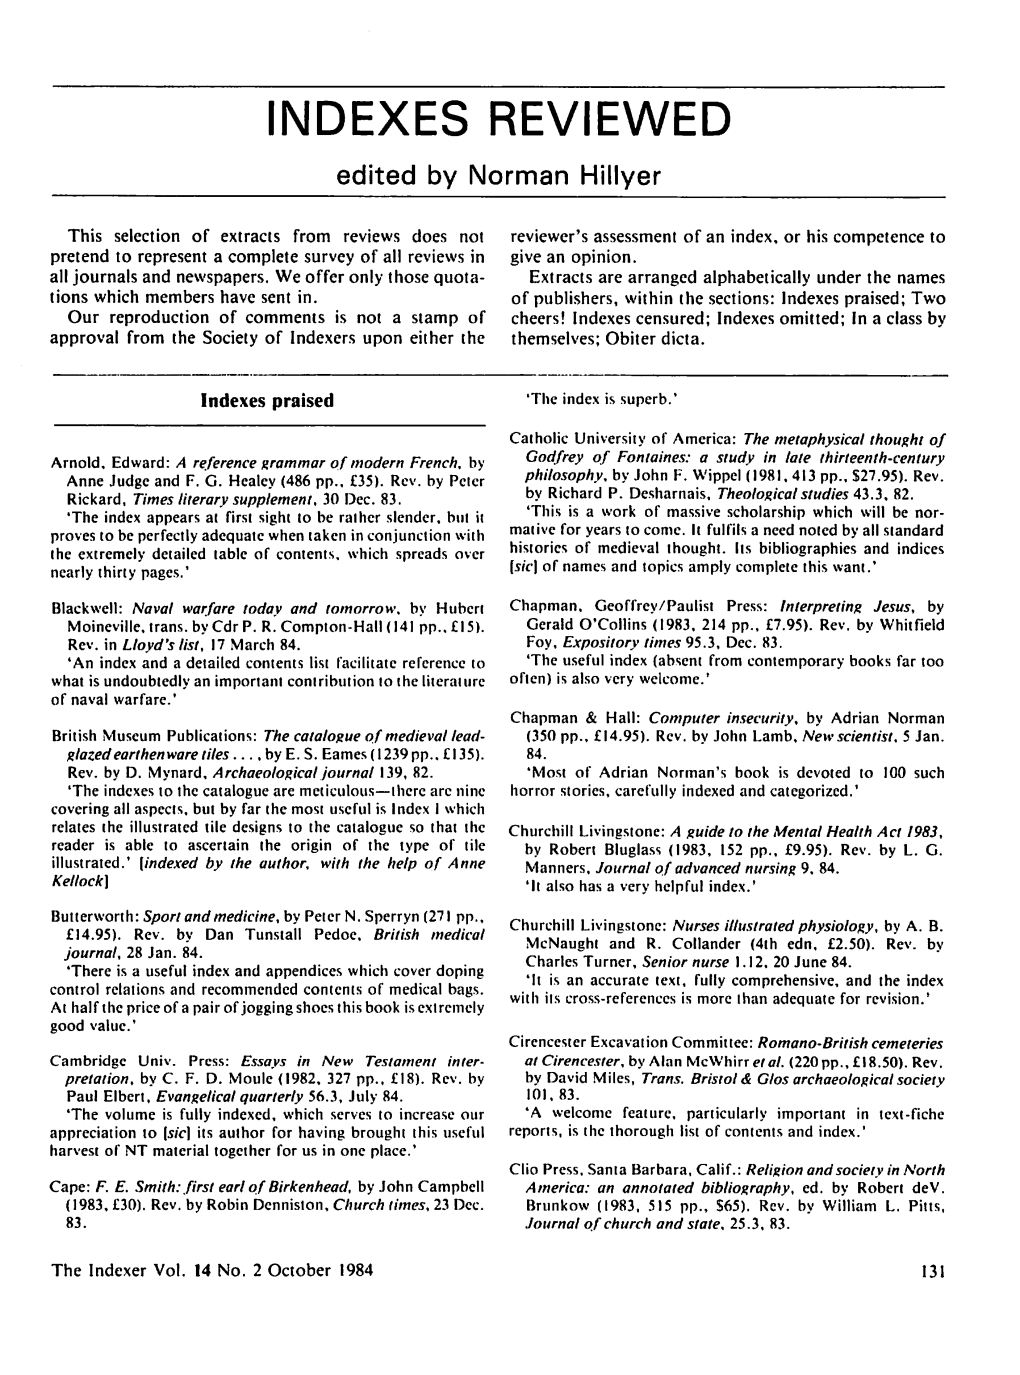 The Indexer Vol 14 No 2 October 1984